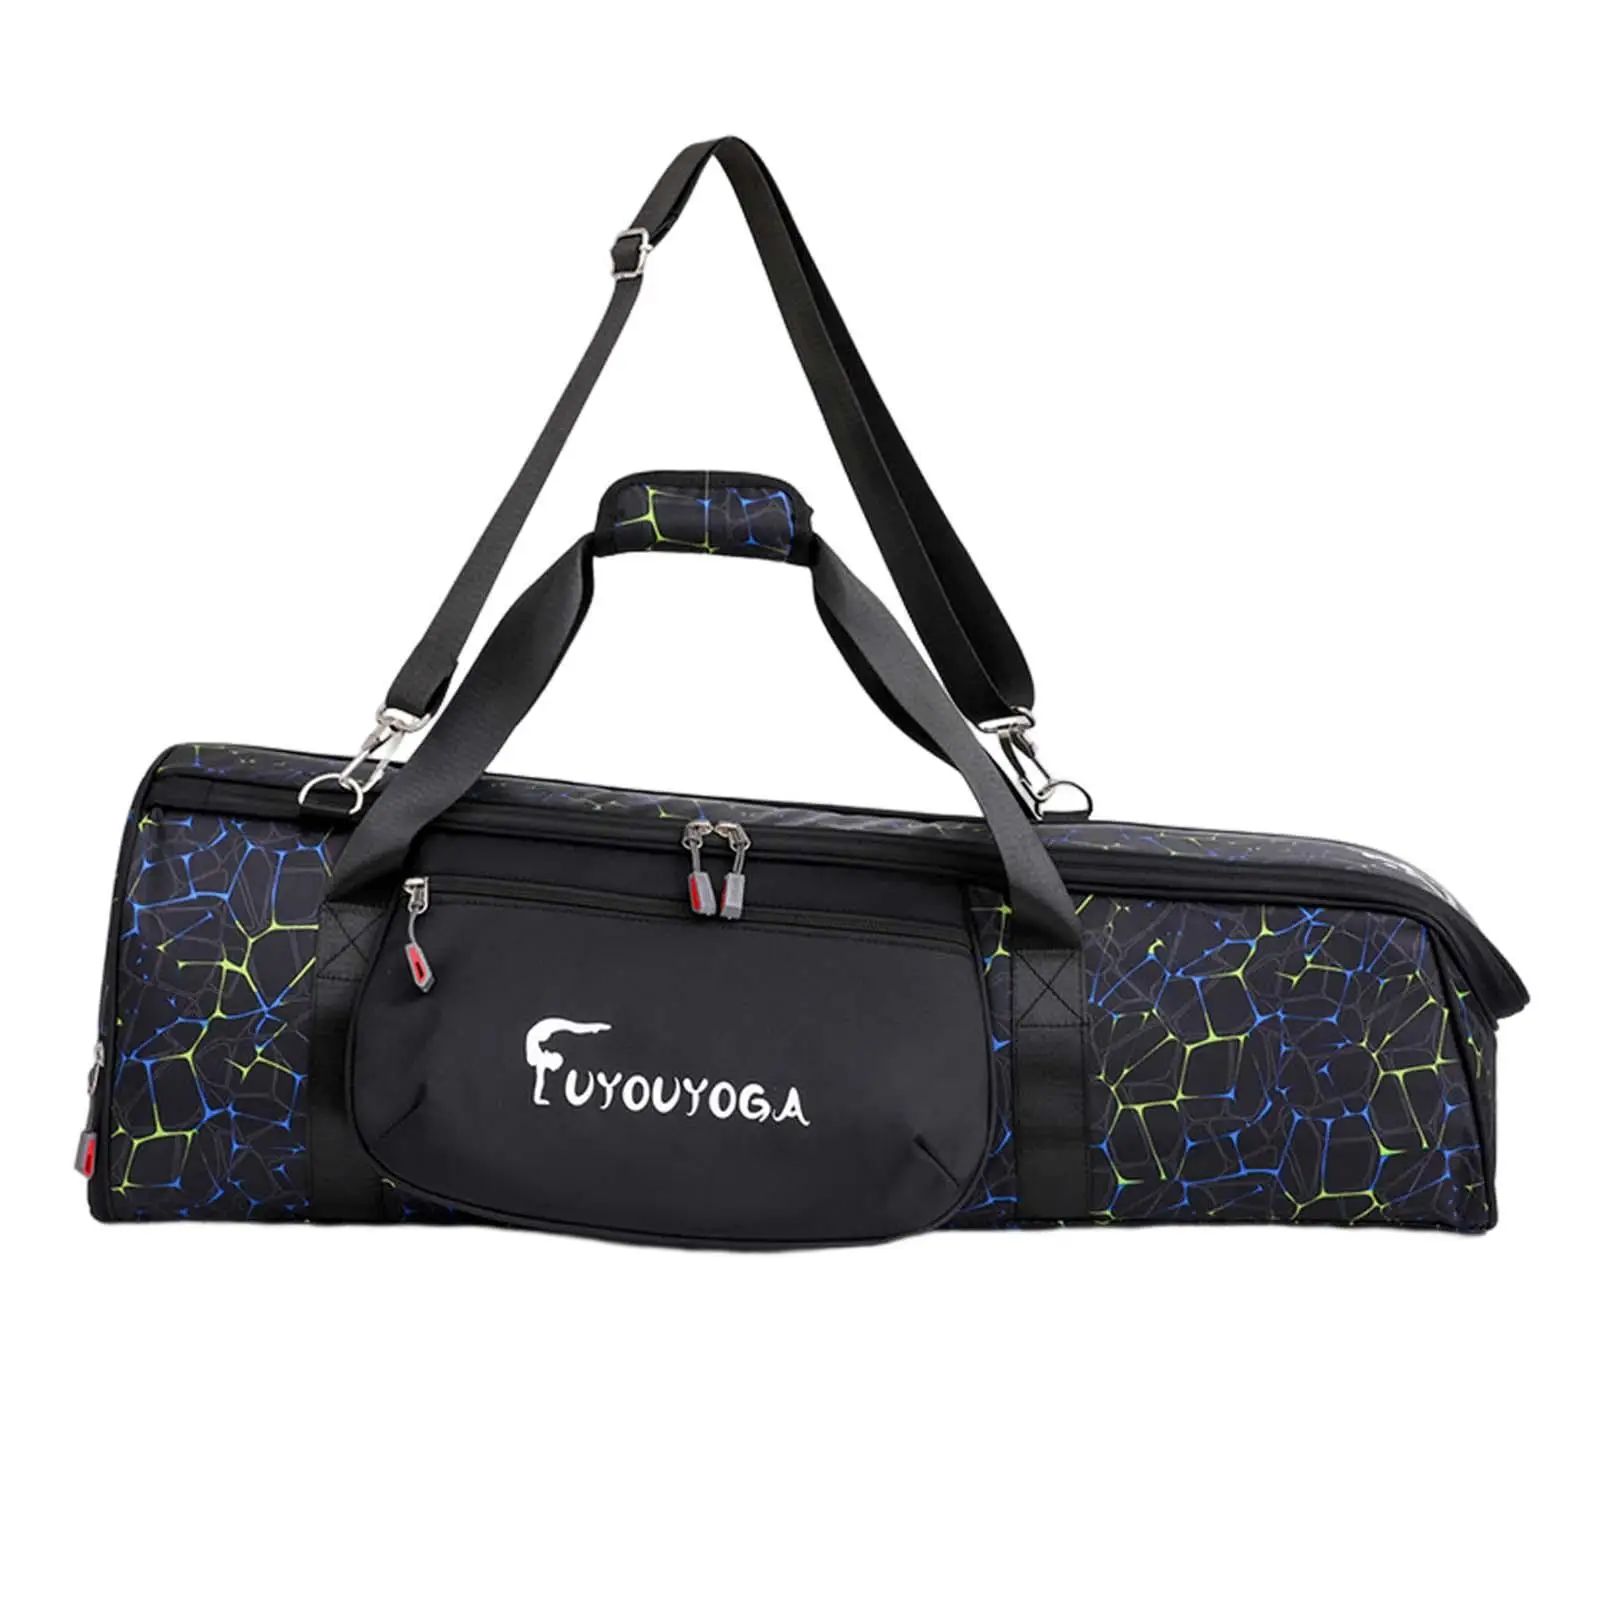 Yoga Mat Carrier Case with Handle Carrier Portable Knapsack Handbag Large Yoga Bags for Yoga Beach Outdoor Pilates Workout